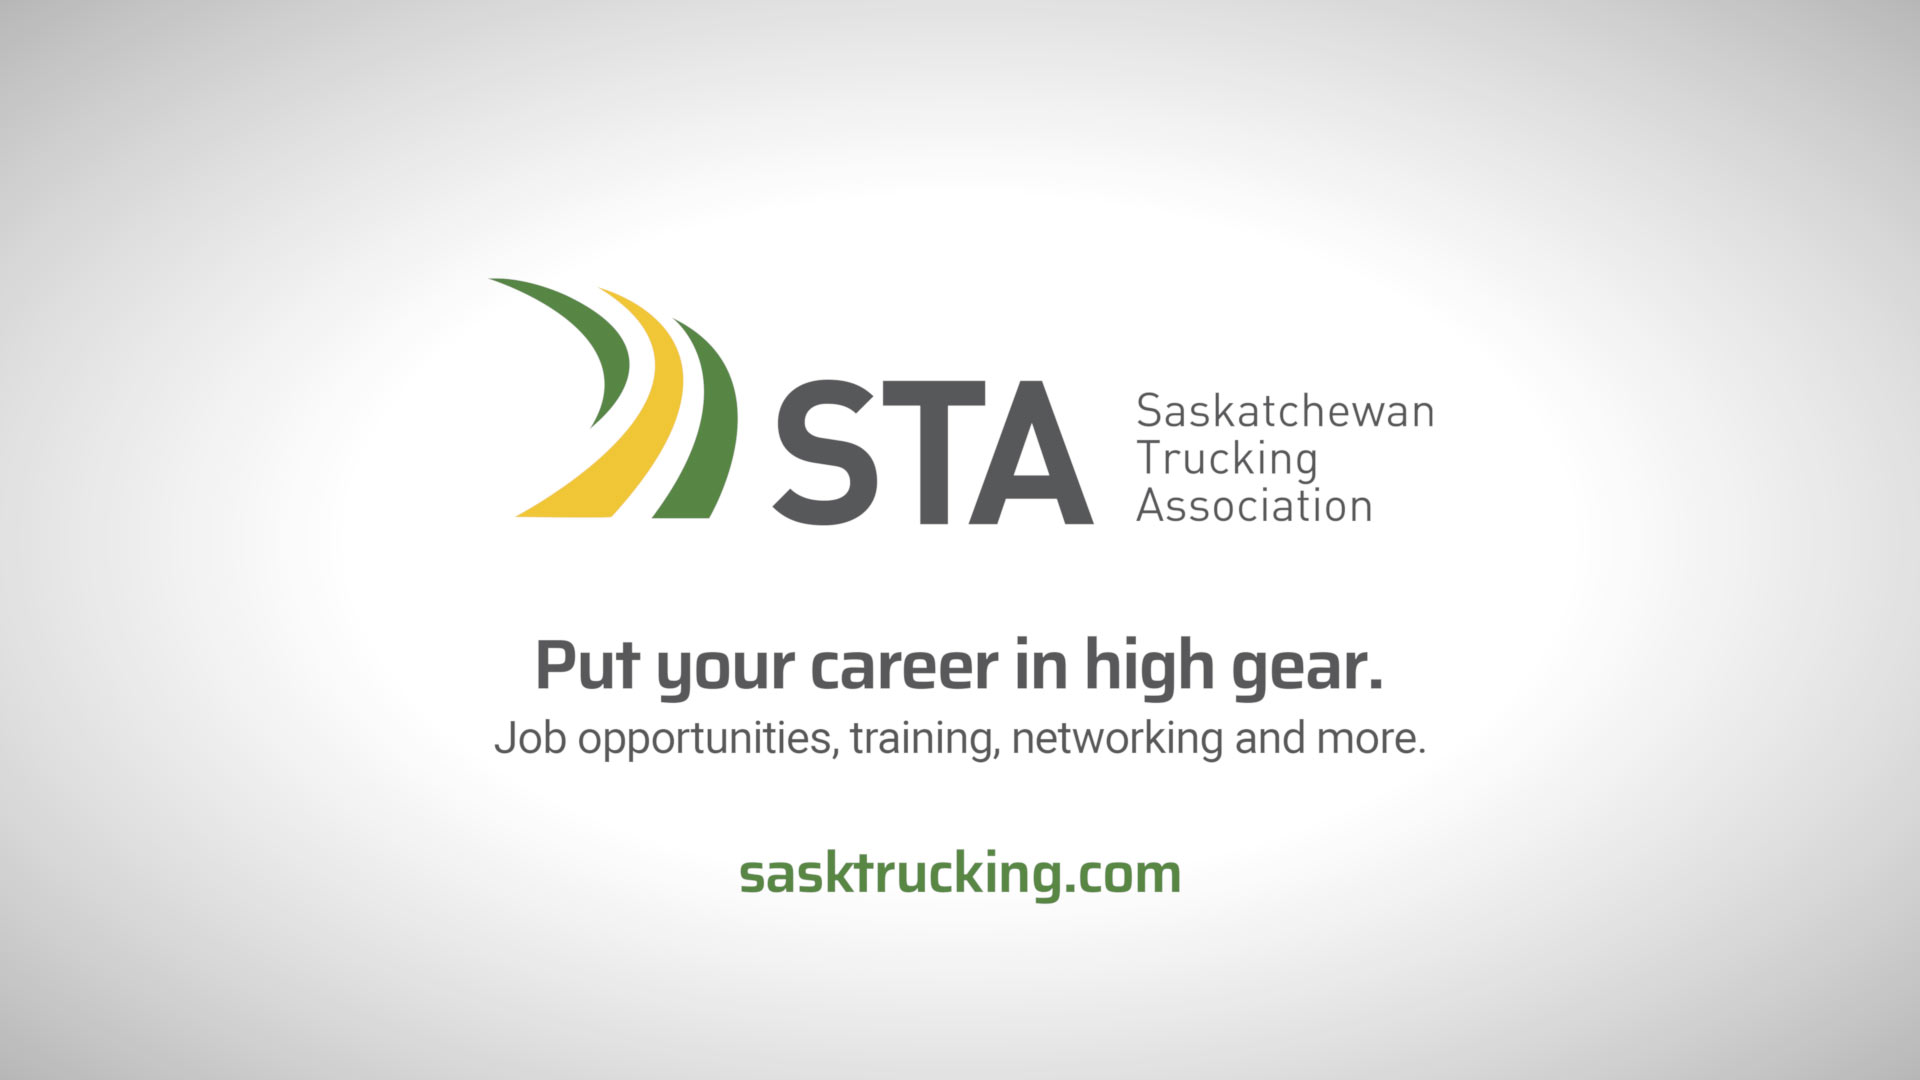 Saskatchewan Trucking Association, Video, Trucking Careers Video - Regina District Industry Education Council, Portfolio Image, 